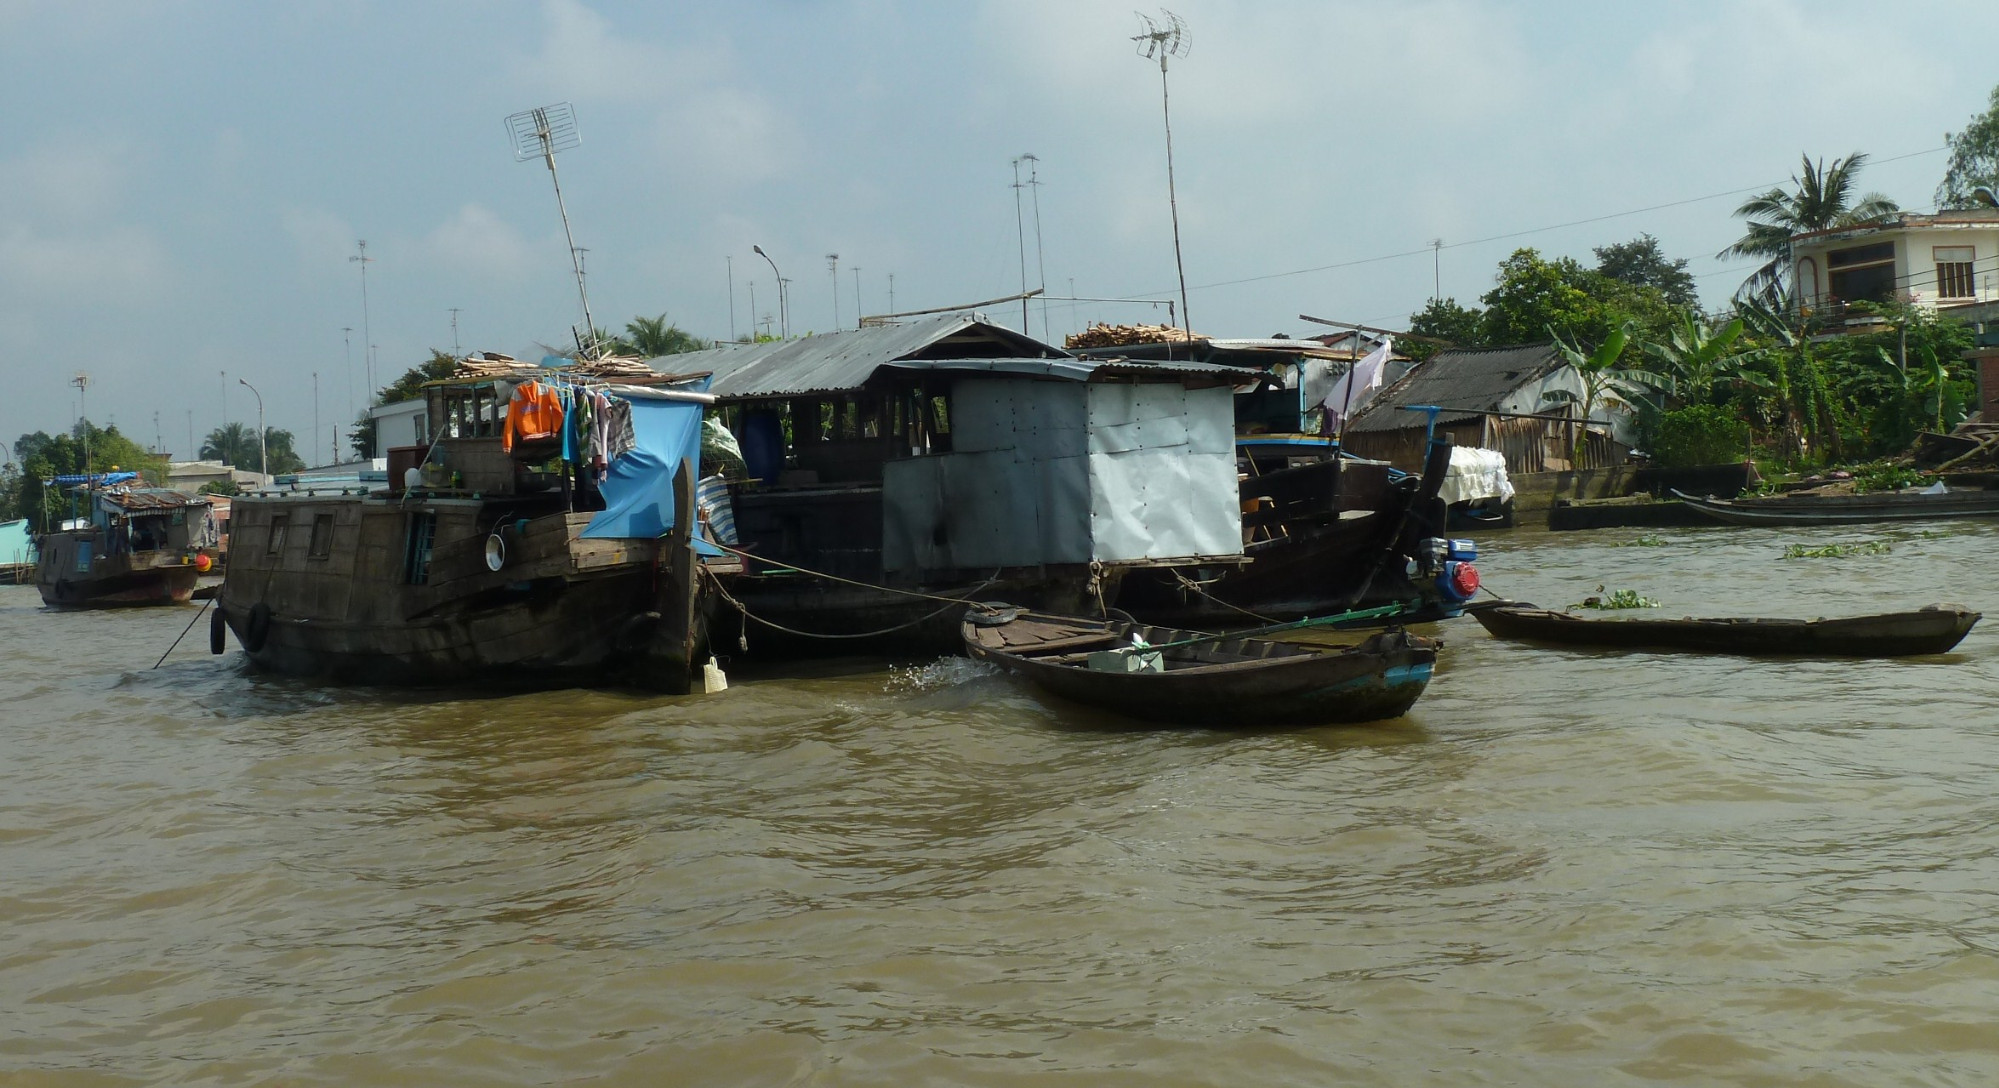 Mekong Boat Trip